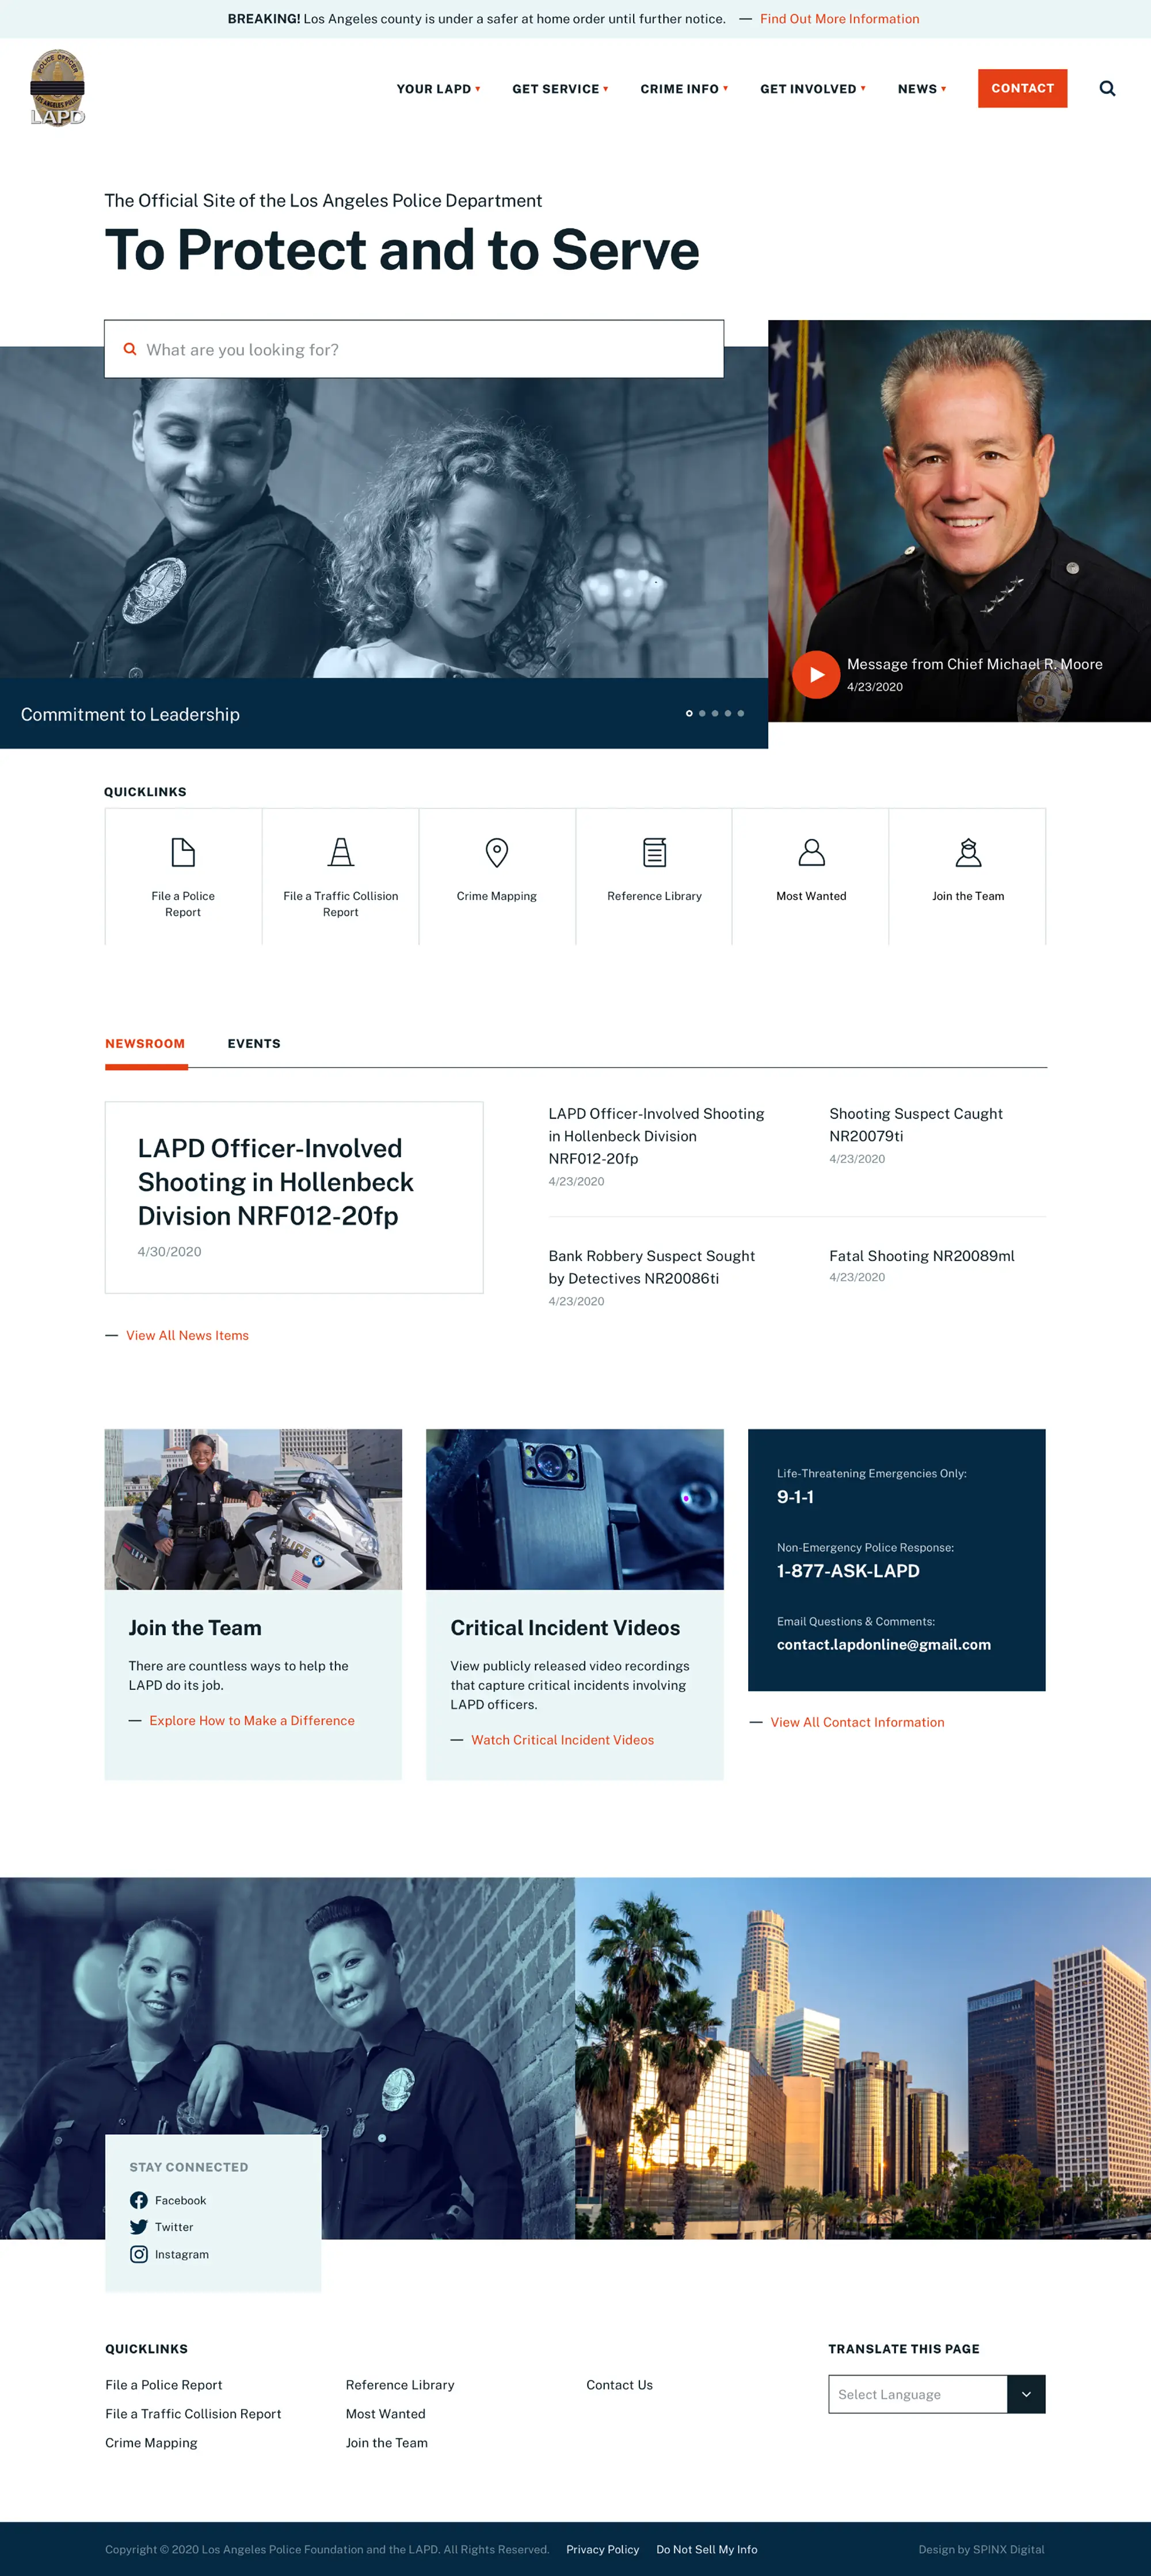 Los Angeles Police Department Website Design & Development Case Study